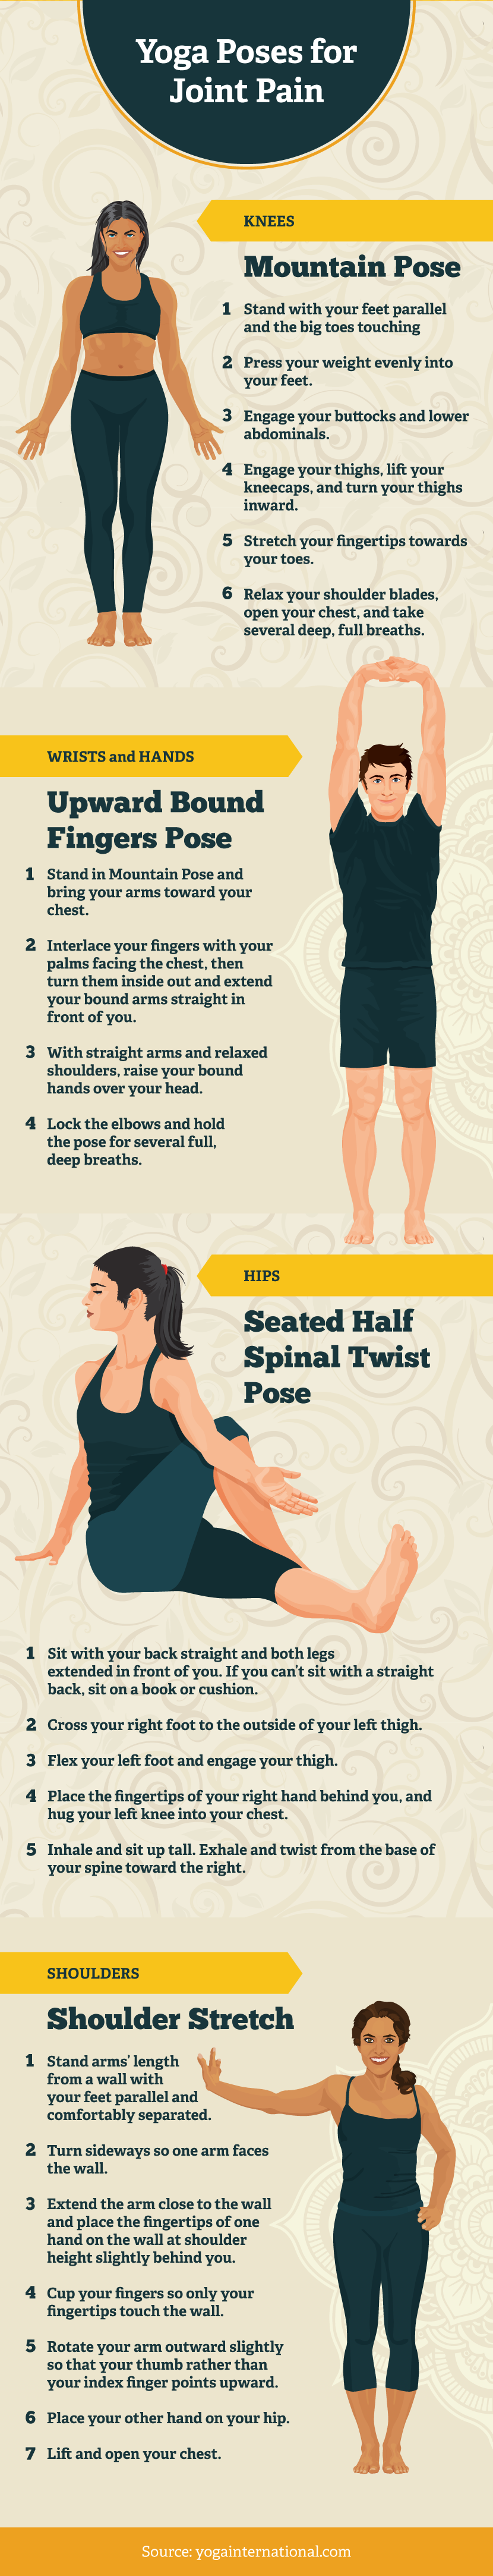 Yoga For Arthritis: 10 Asanas to Strengthen Your Knees